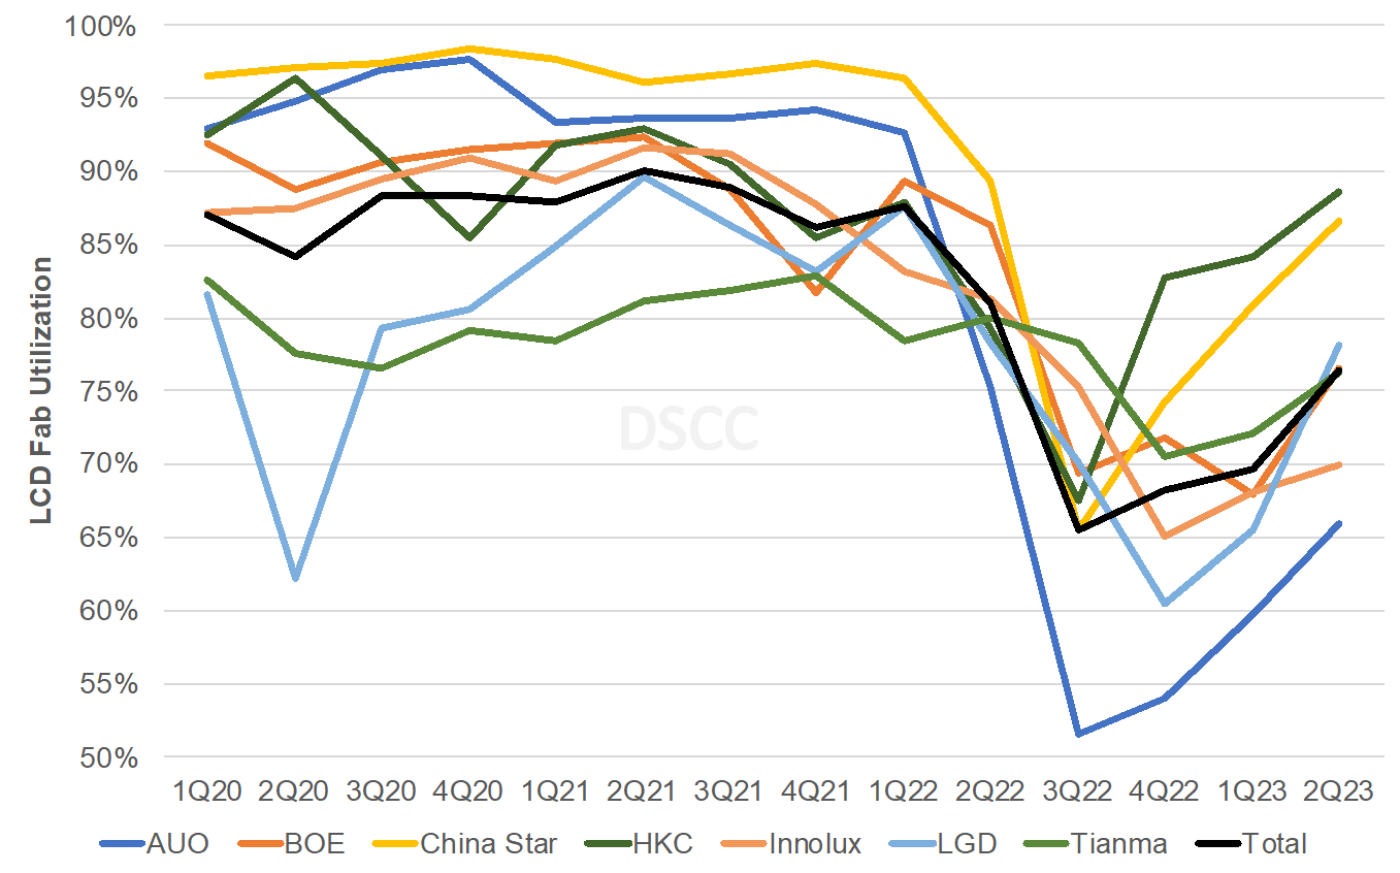 Source: DSCC’s Quarterly Display Fab Utilization Report